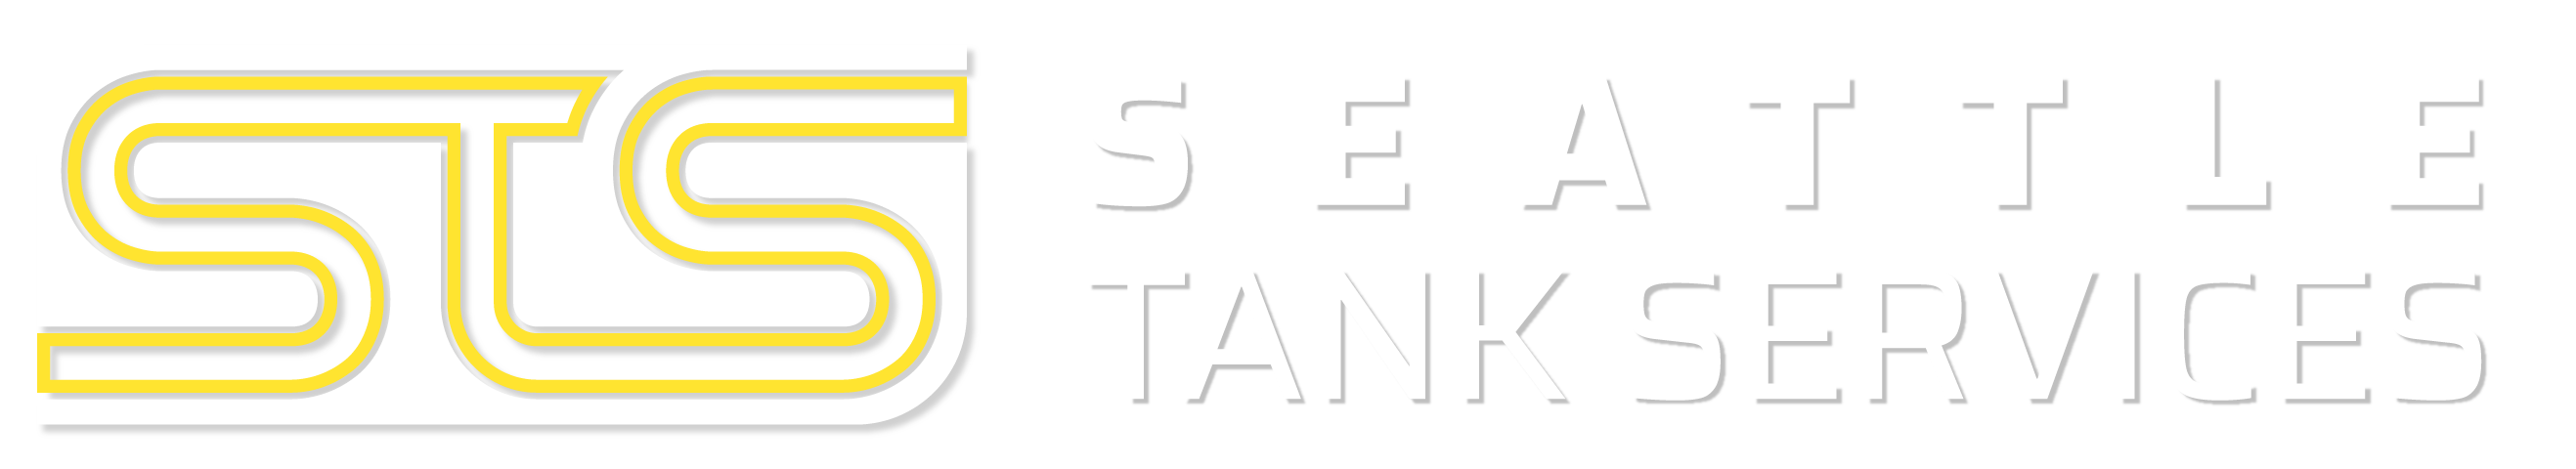 Seattle Tank Services